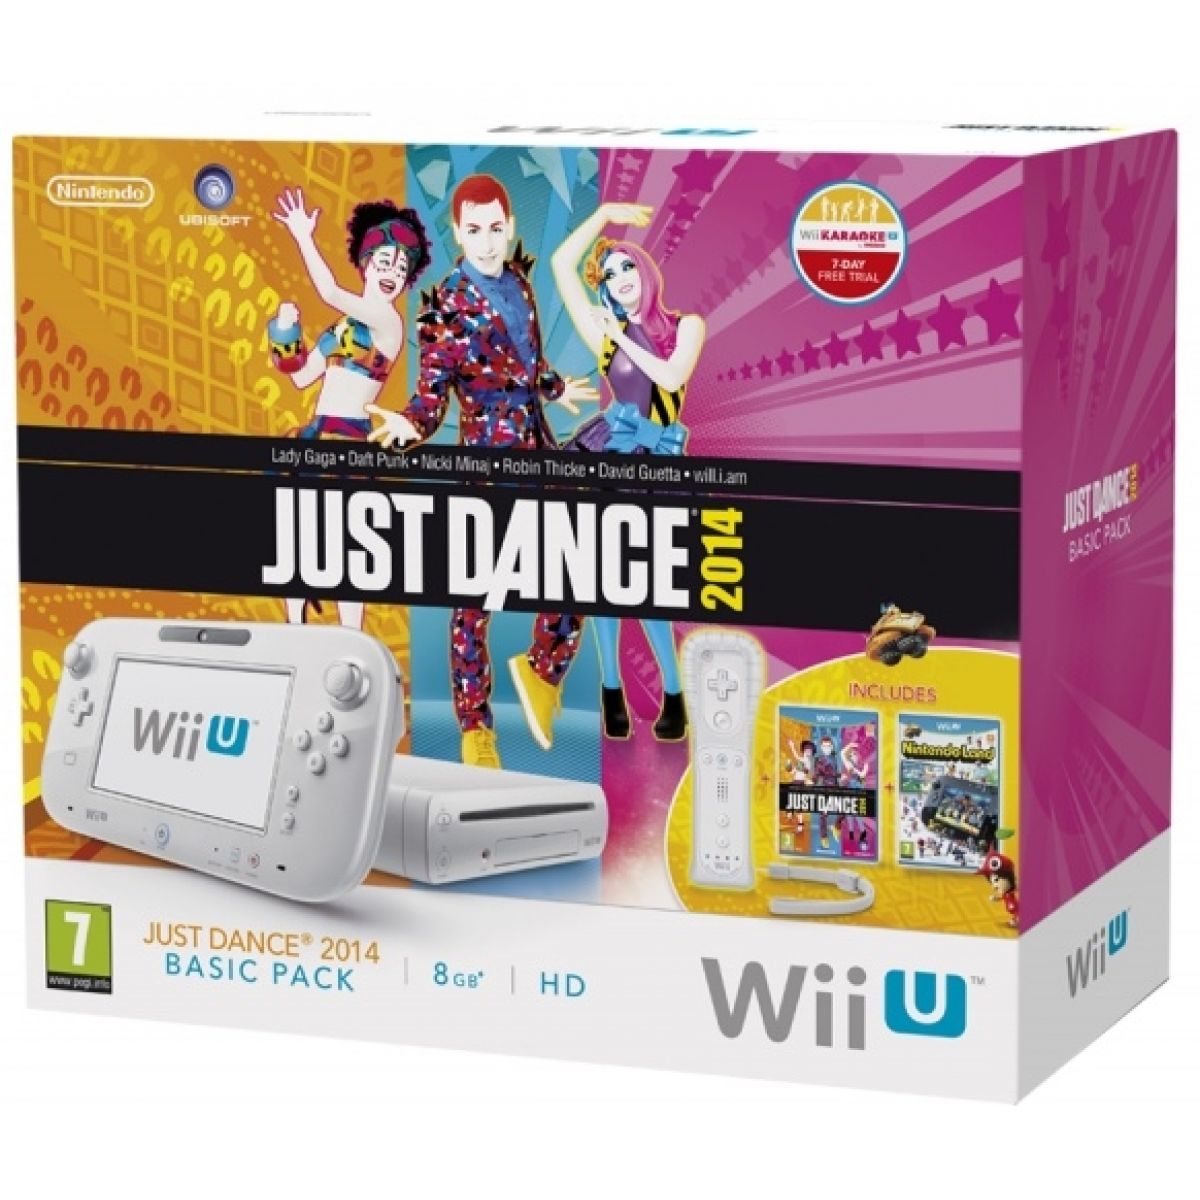 Nintendo Wii U White Basic Pack (8GB) + Nintendo Land + Just Dance 2014